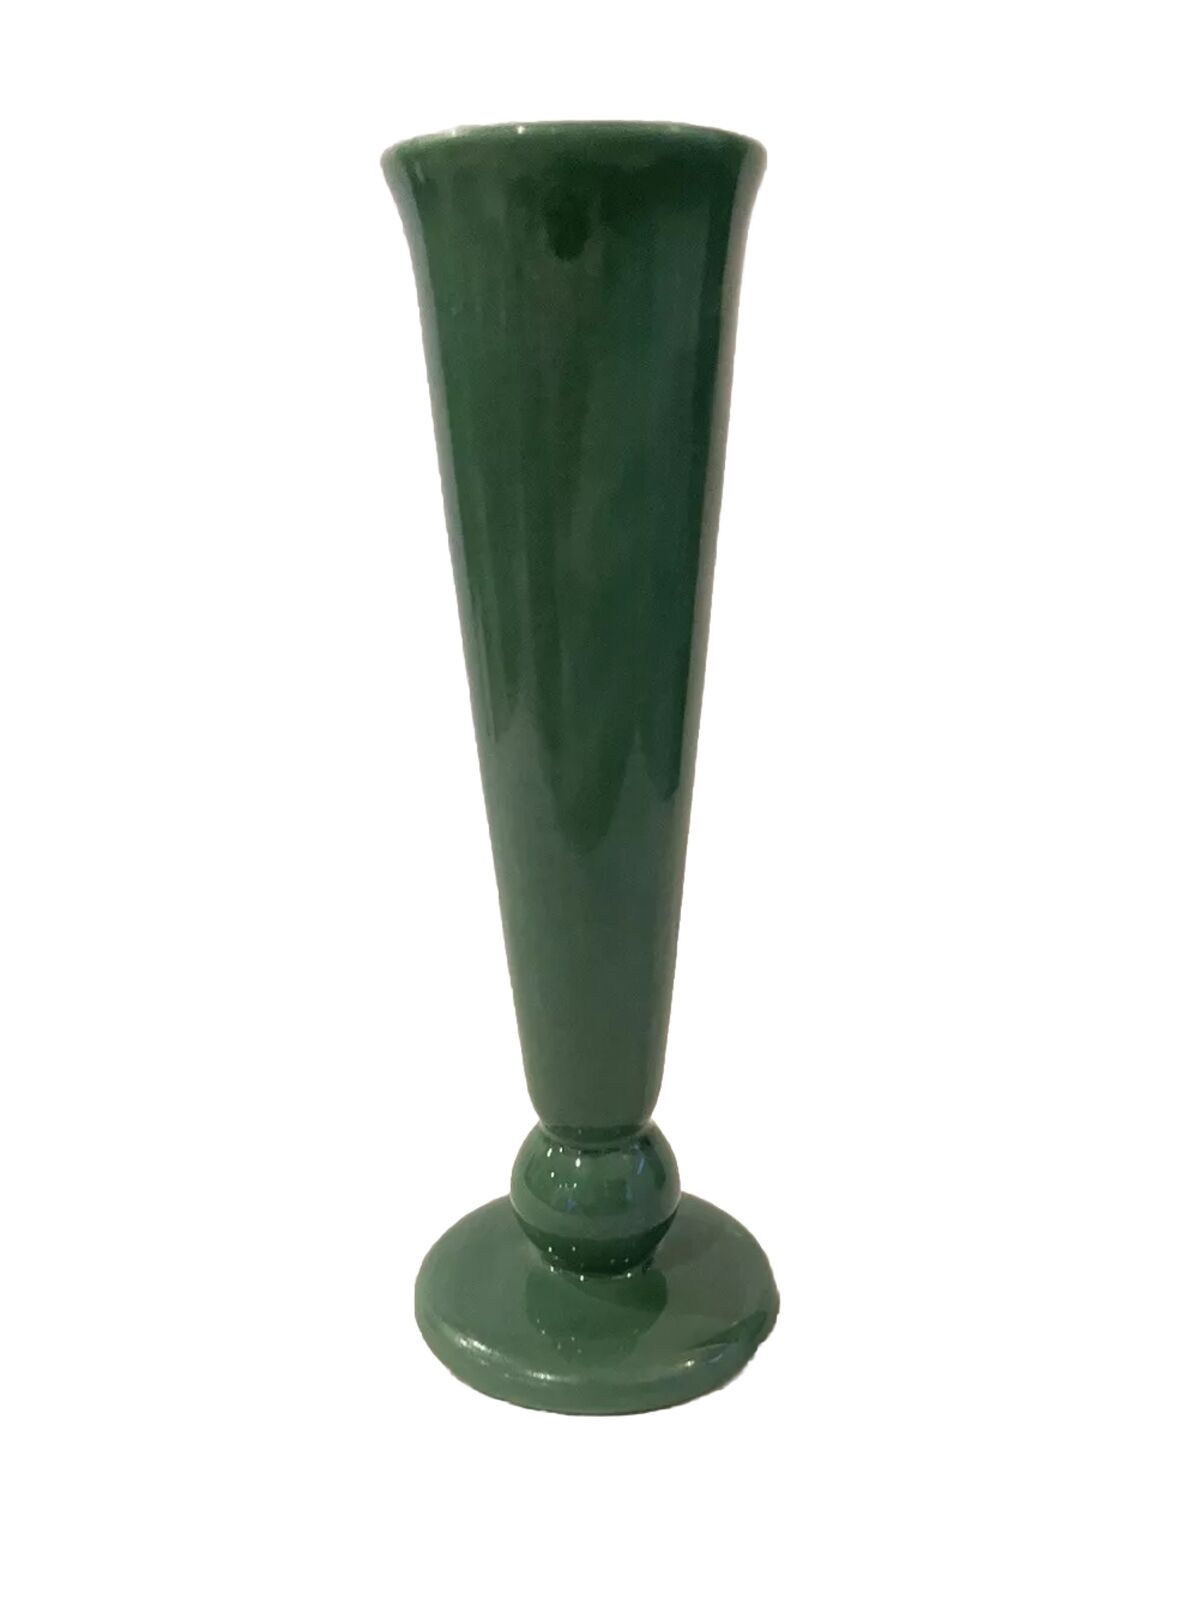 Haeger Art Pottery Vase Vintage Mid Century Modern Bud 9” Green Ceramic USA